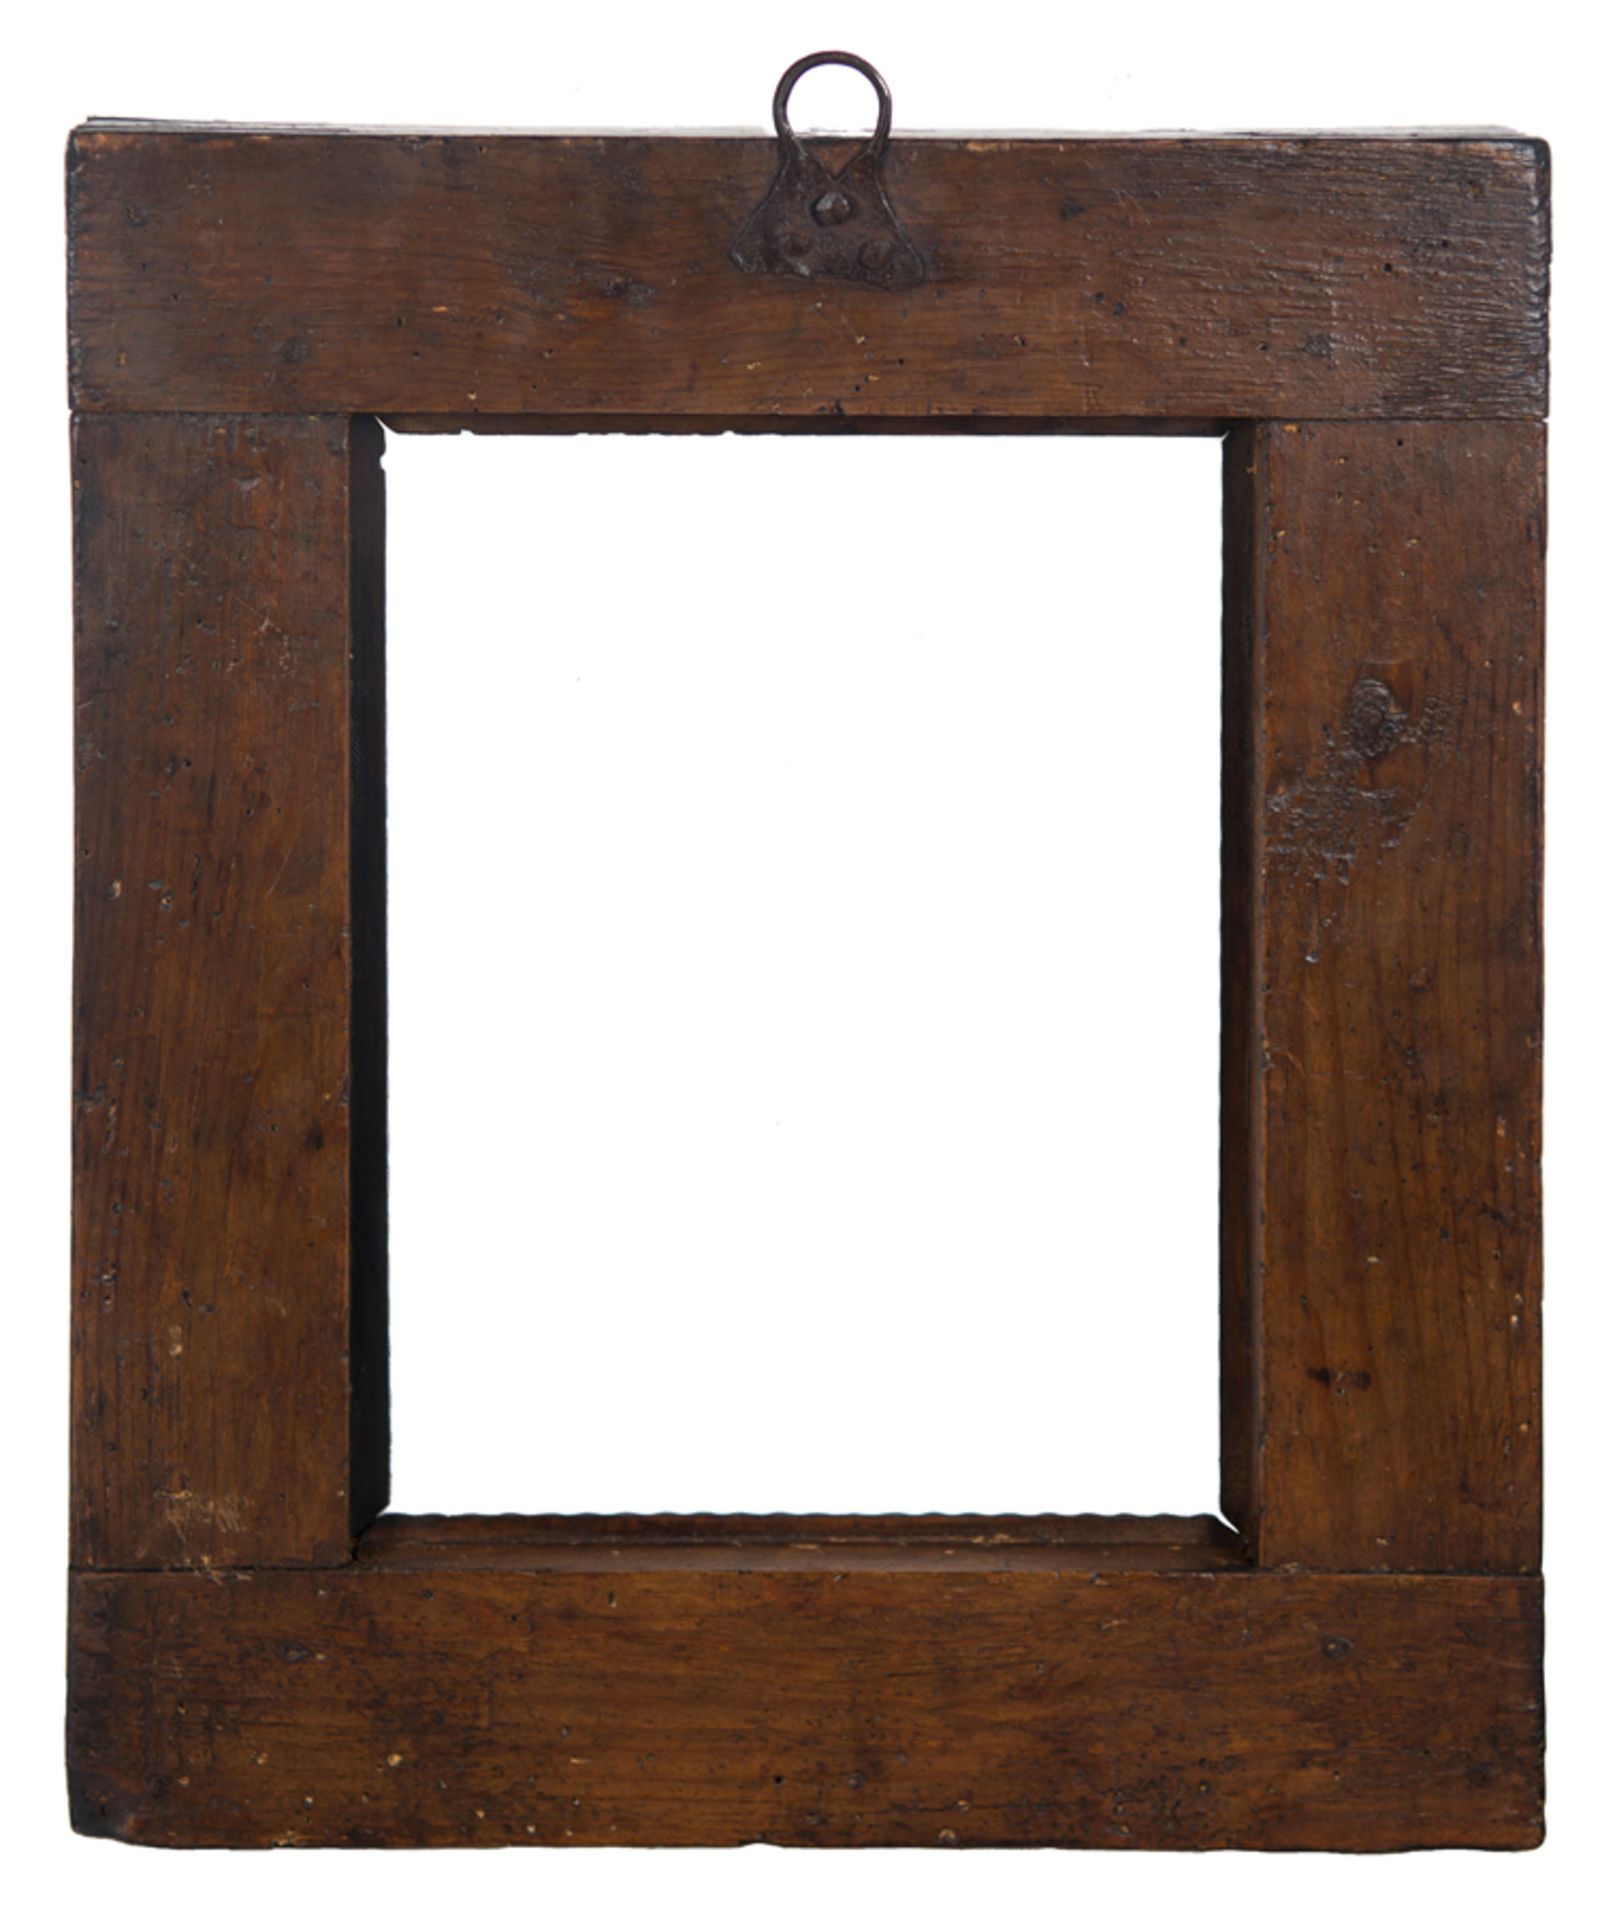 Ebonised wooden frame. Netherlandish work. 17th - 18th century. - Bild 3 aus 3